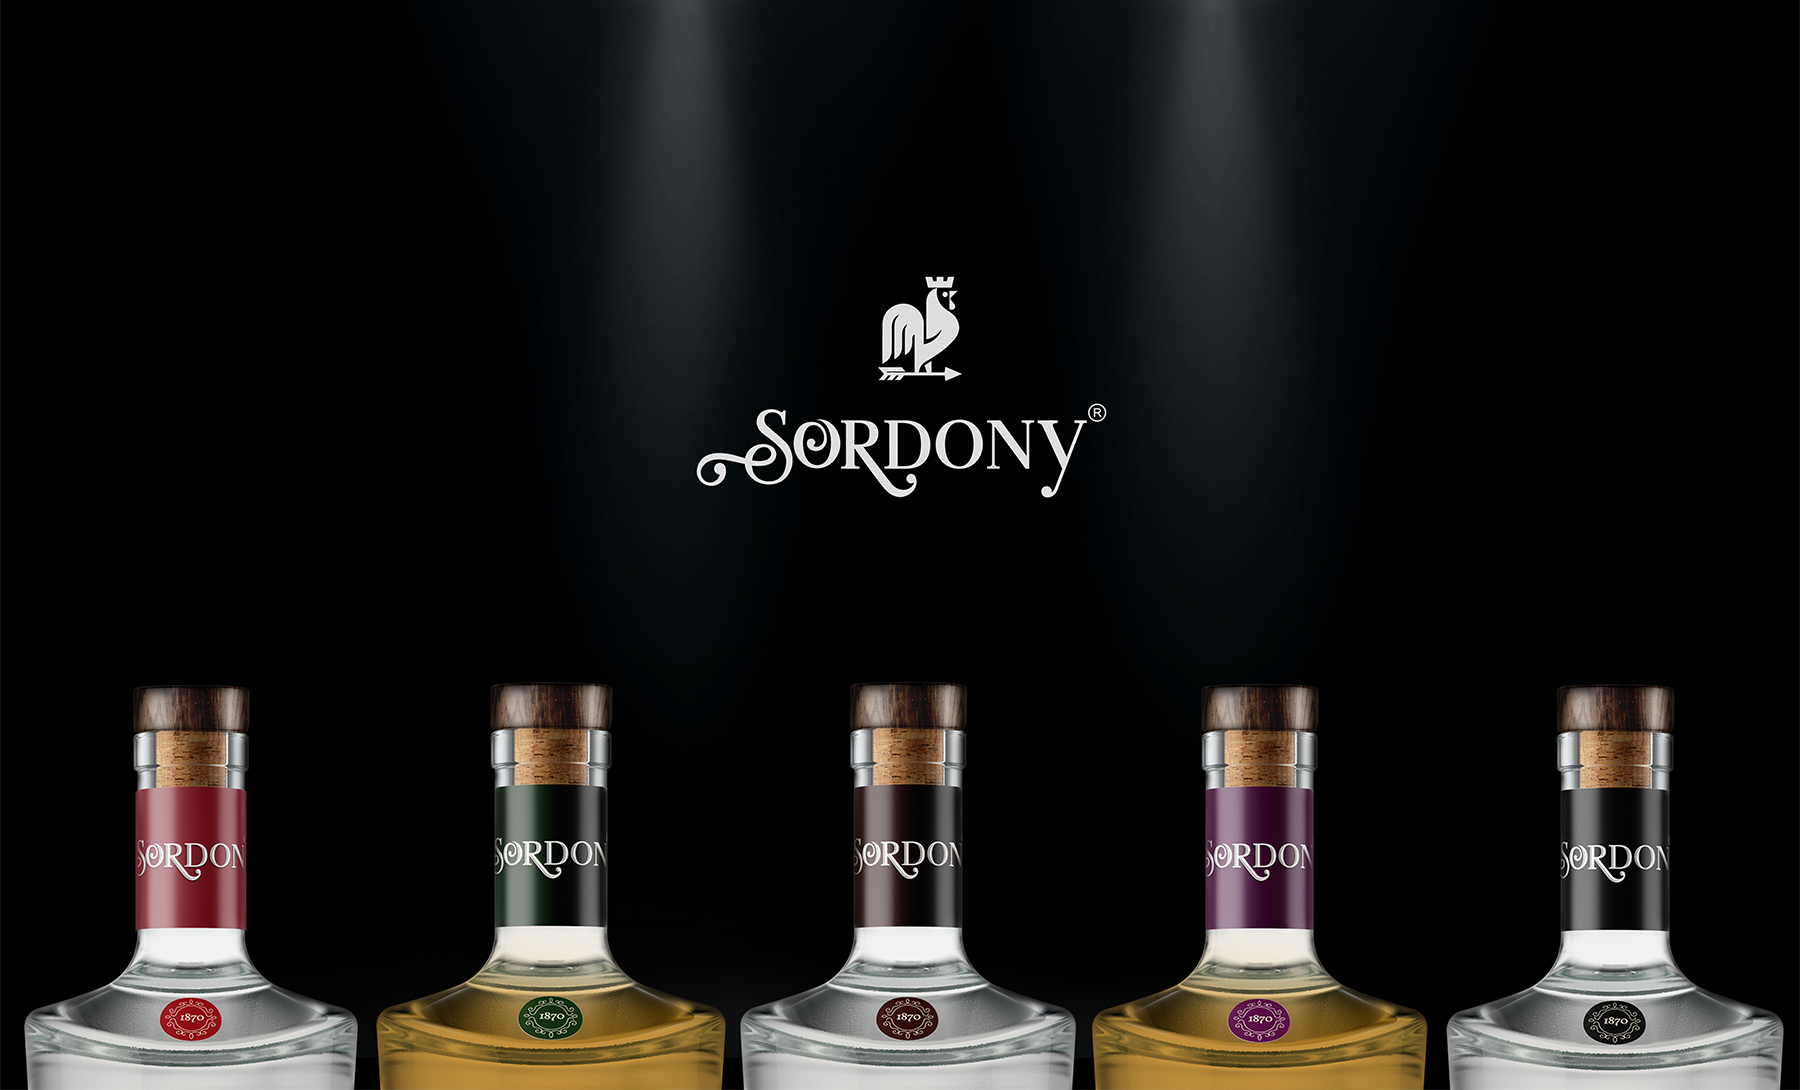 Sordony label design portfolio